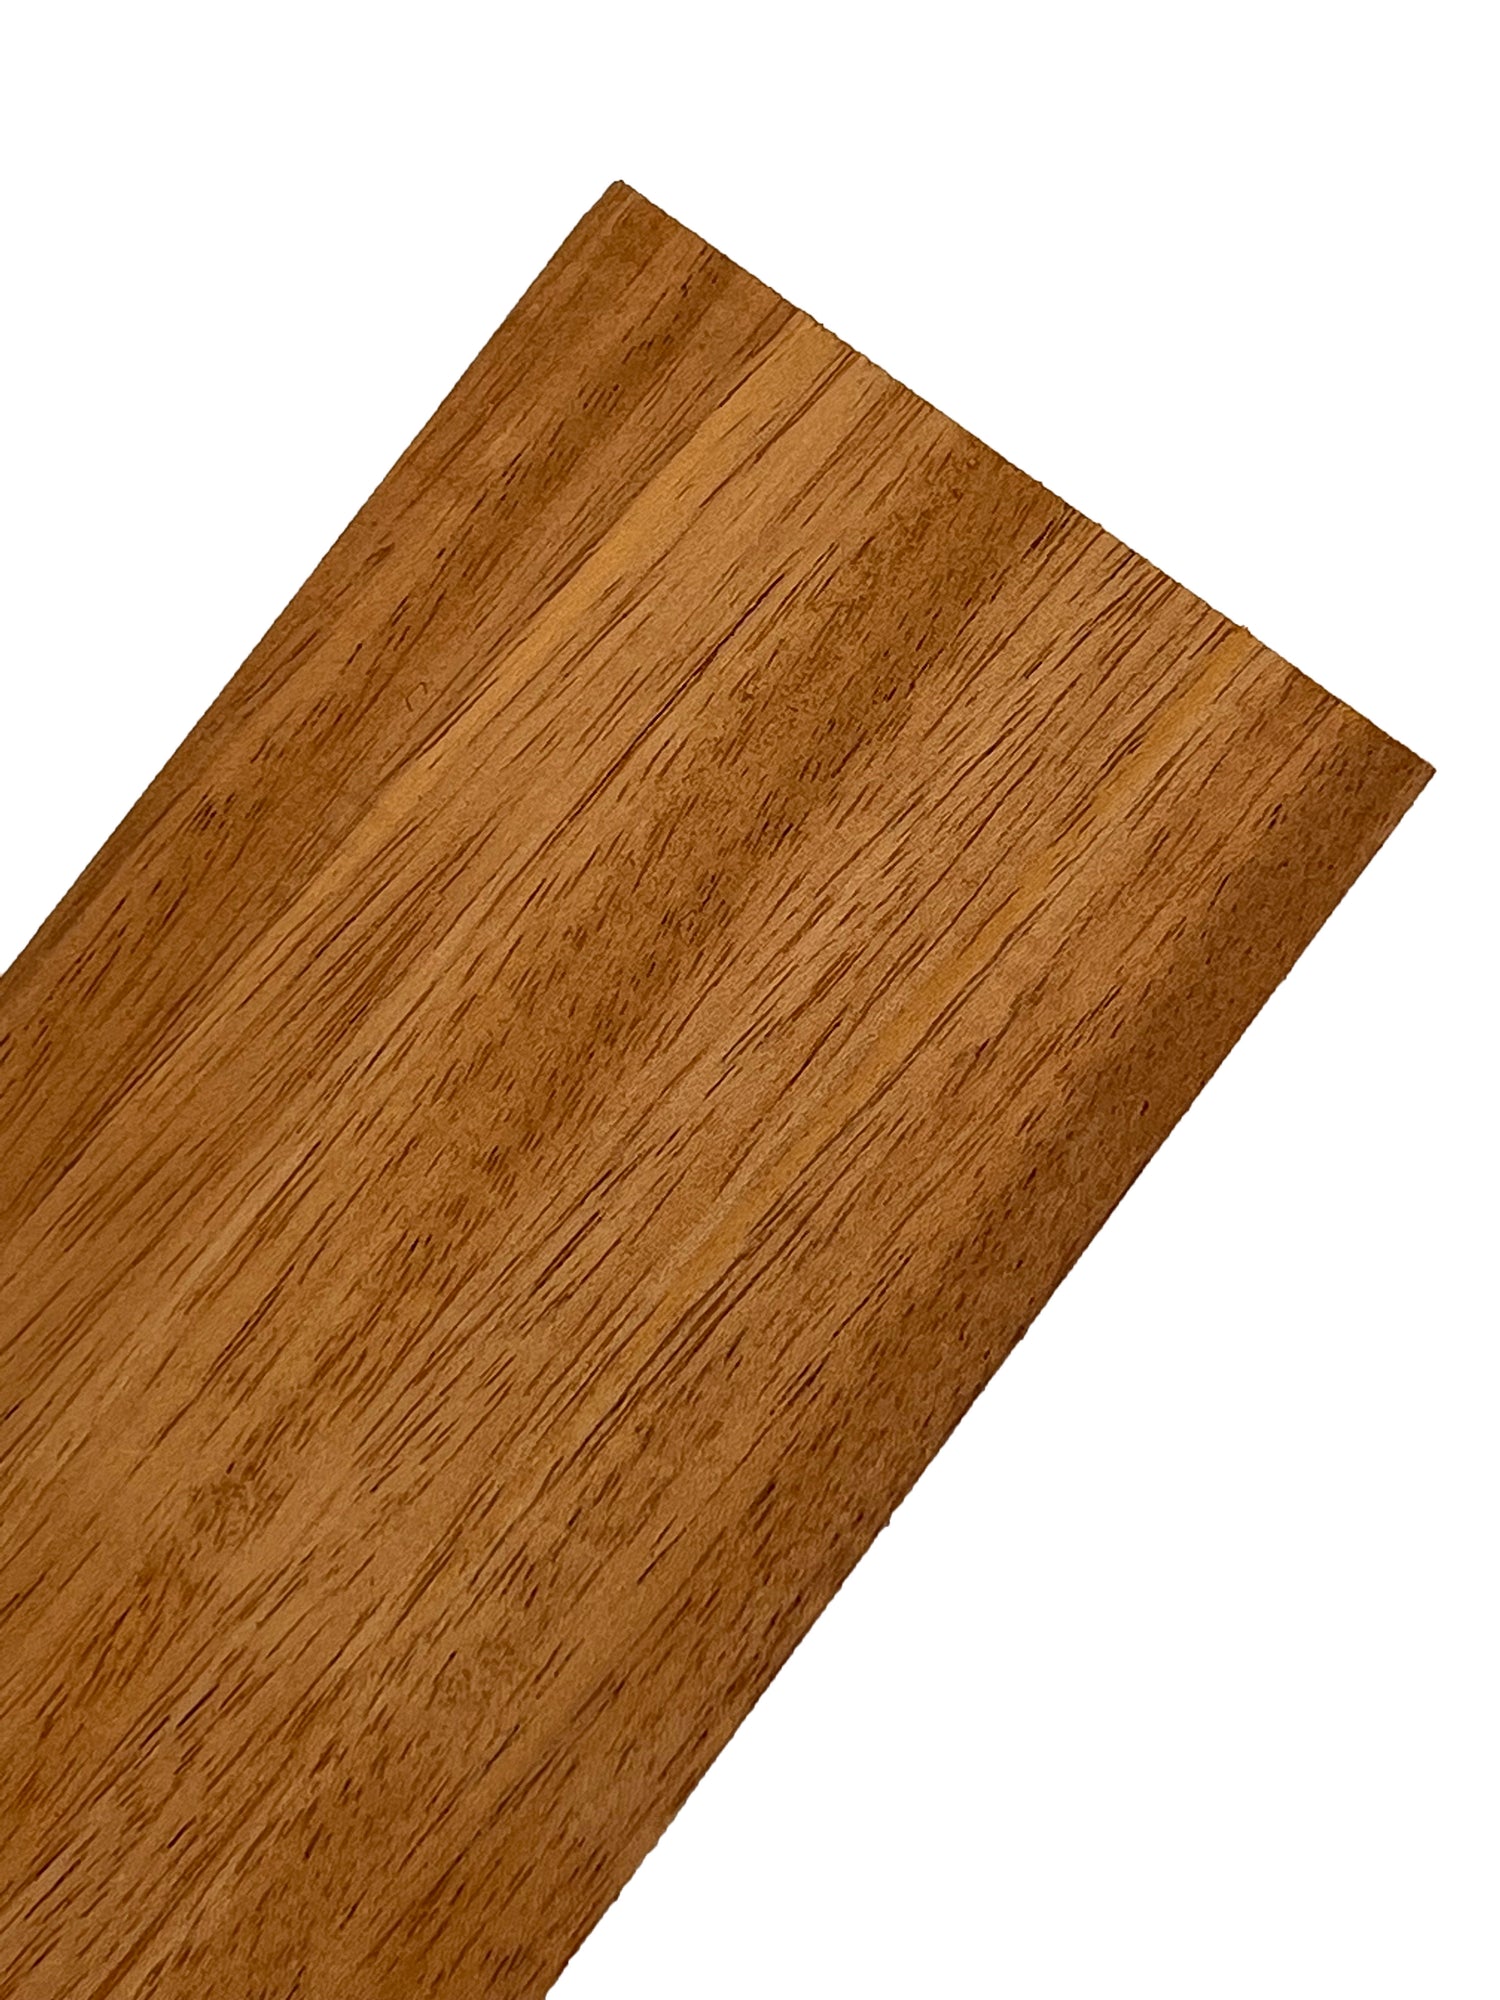 Honduran Mahogany Thin Stock Lumber Boards Wood Crafts - Exotic Wood Zone - Buy online Across USA 